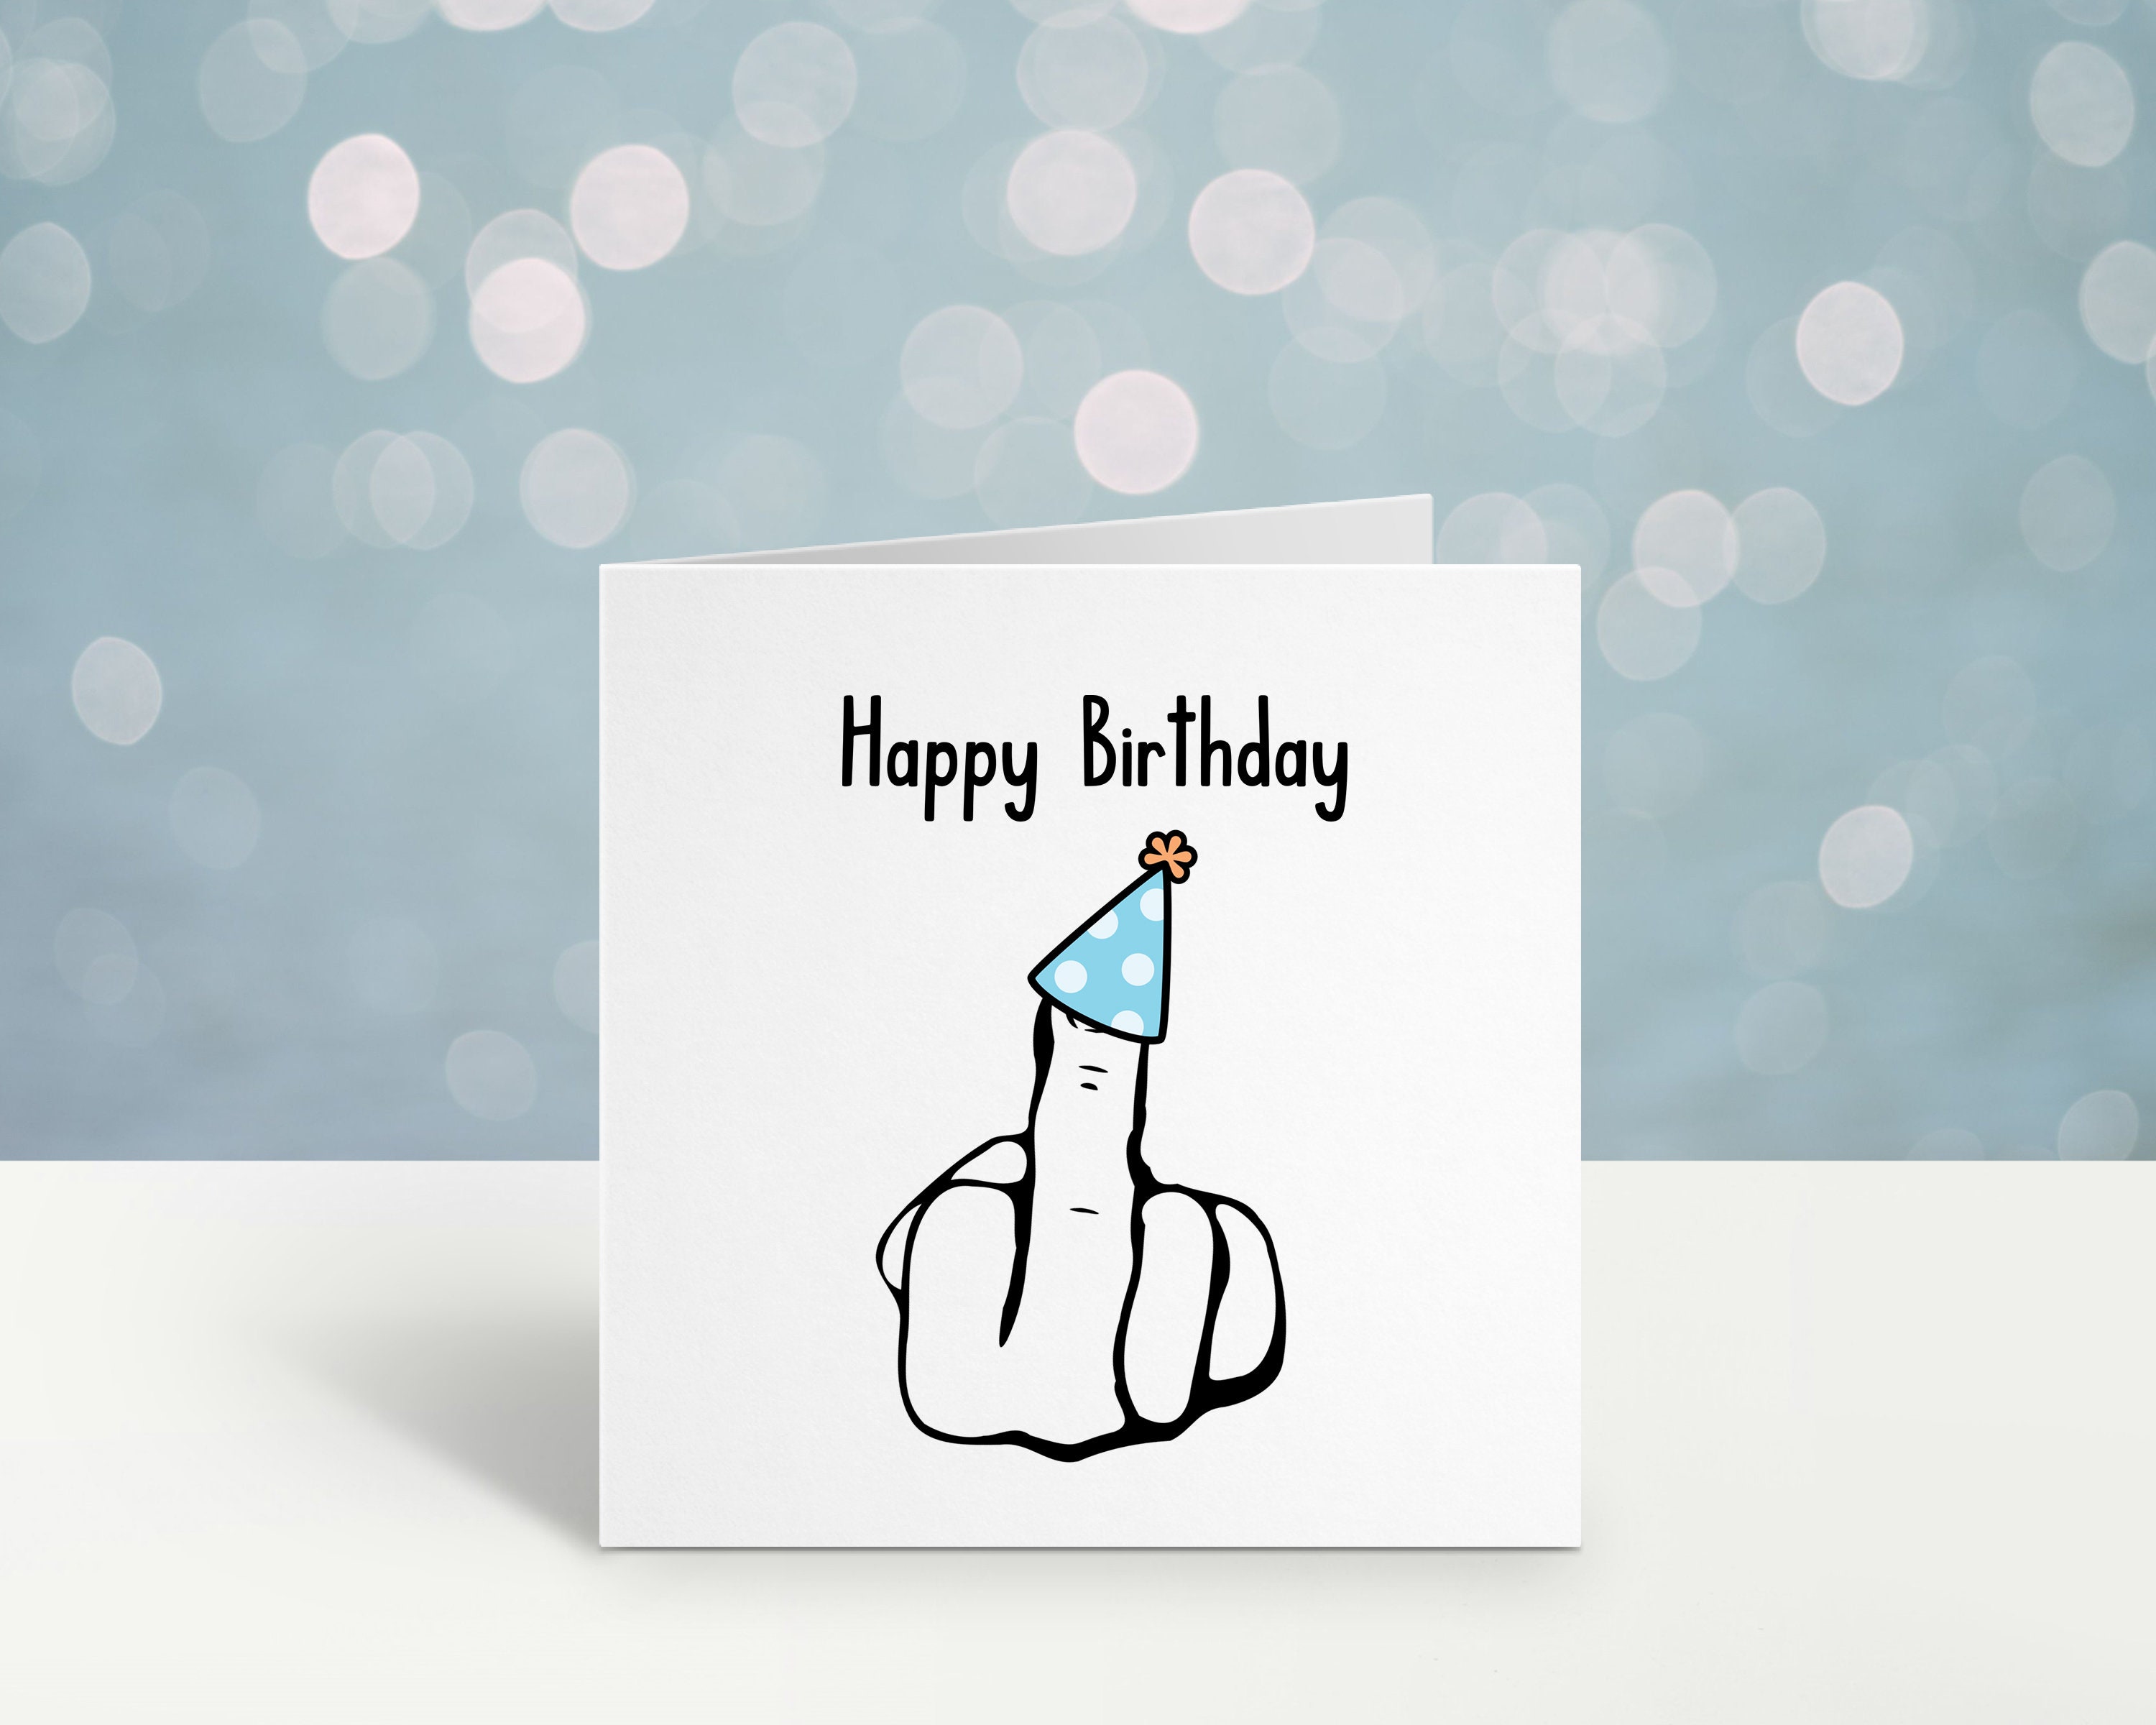 I am 29+ Middle finger - Twenty-Nine Plus Middlefinger 30 30th Birthday  Gifts - Birthday Gift Idea - Magnet